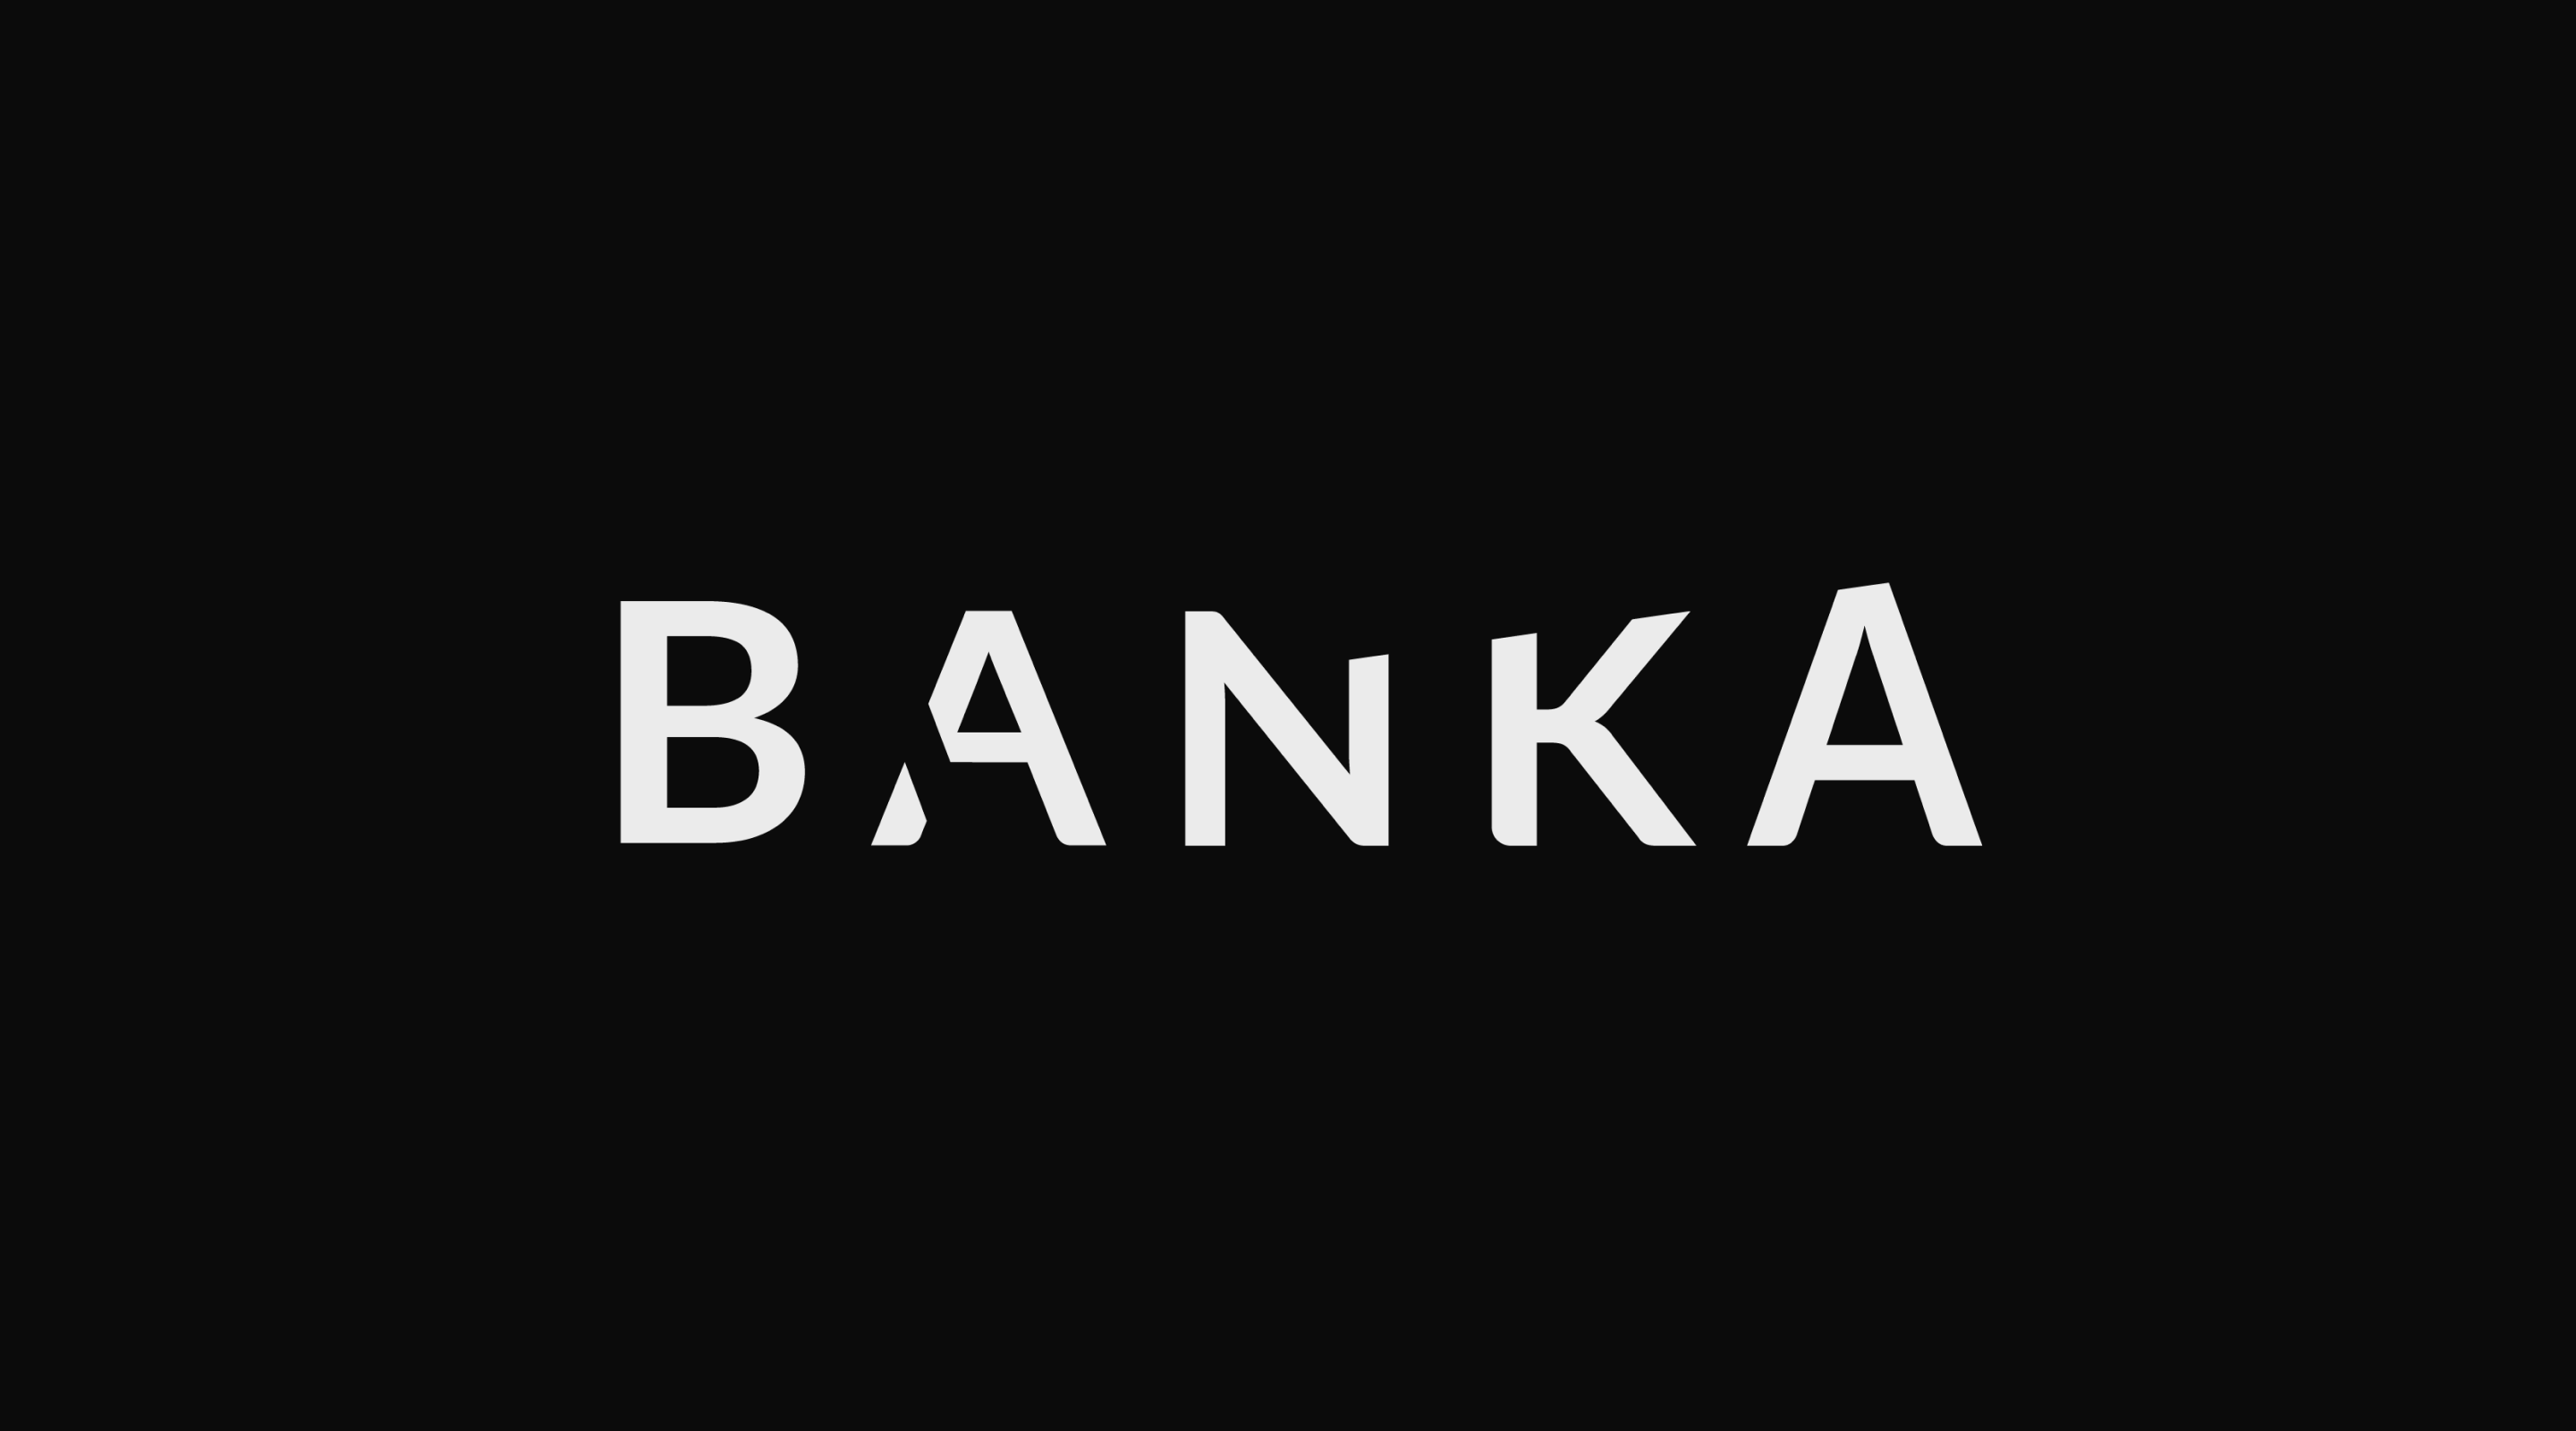 BANKAのWEBサイトを公開しました！